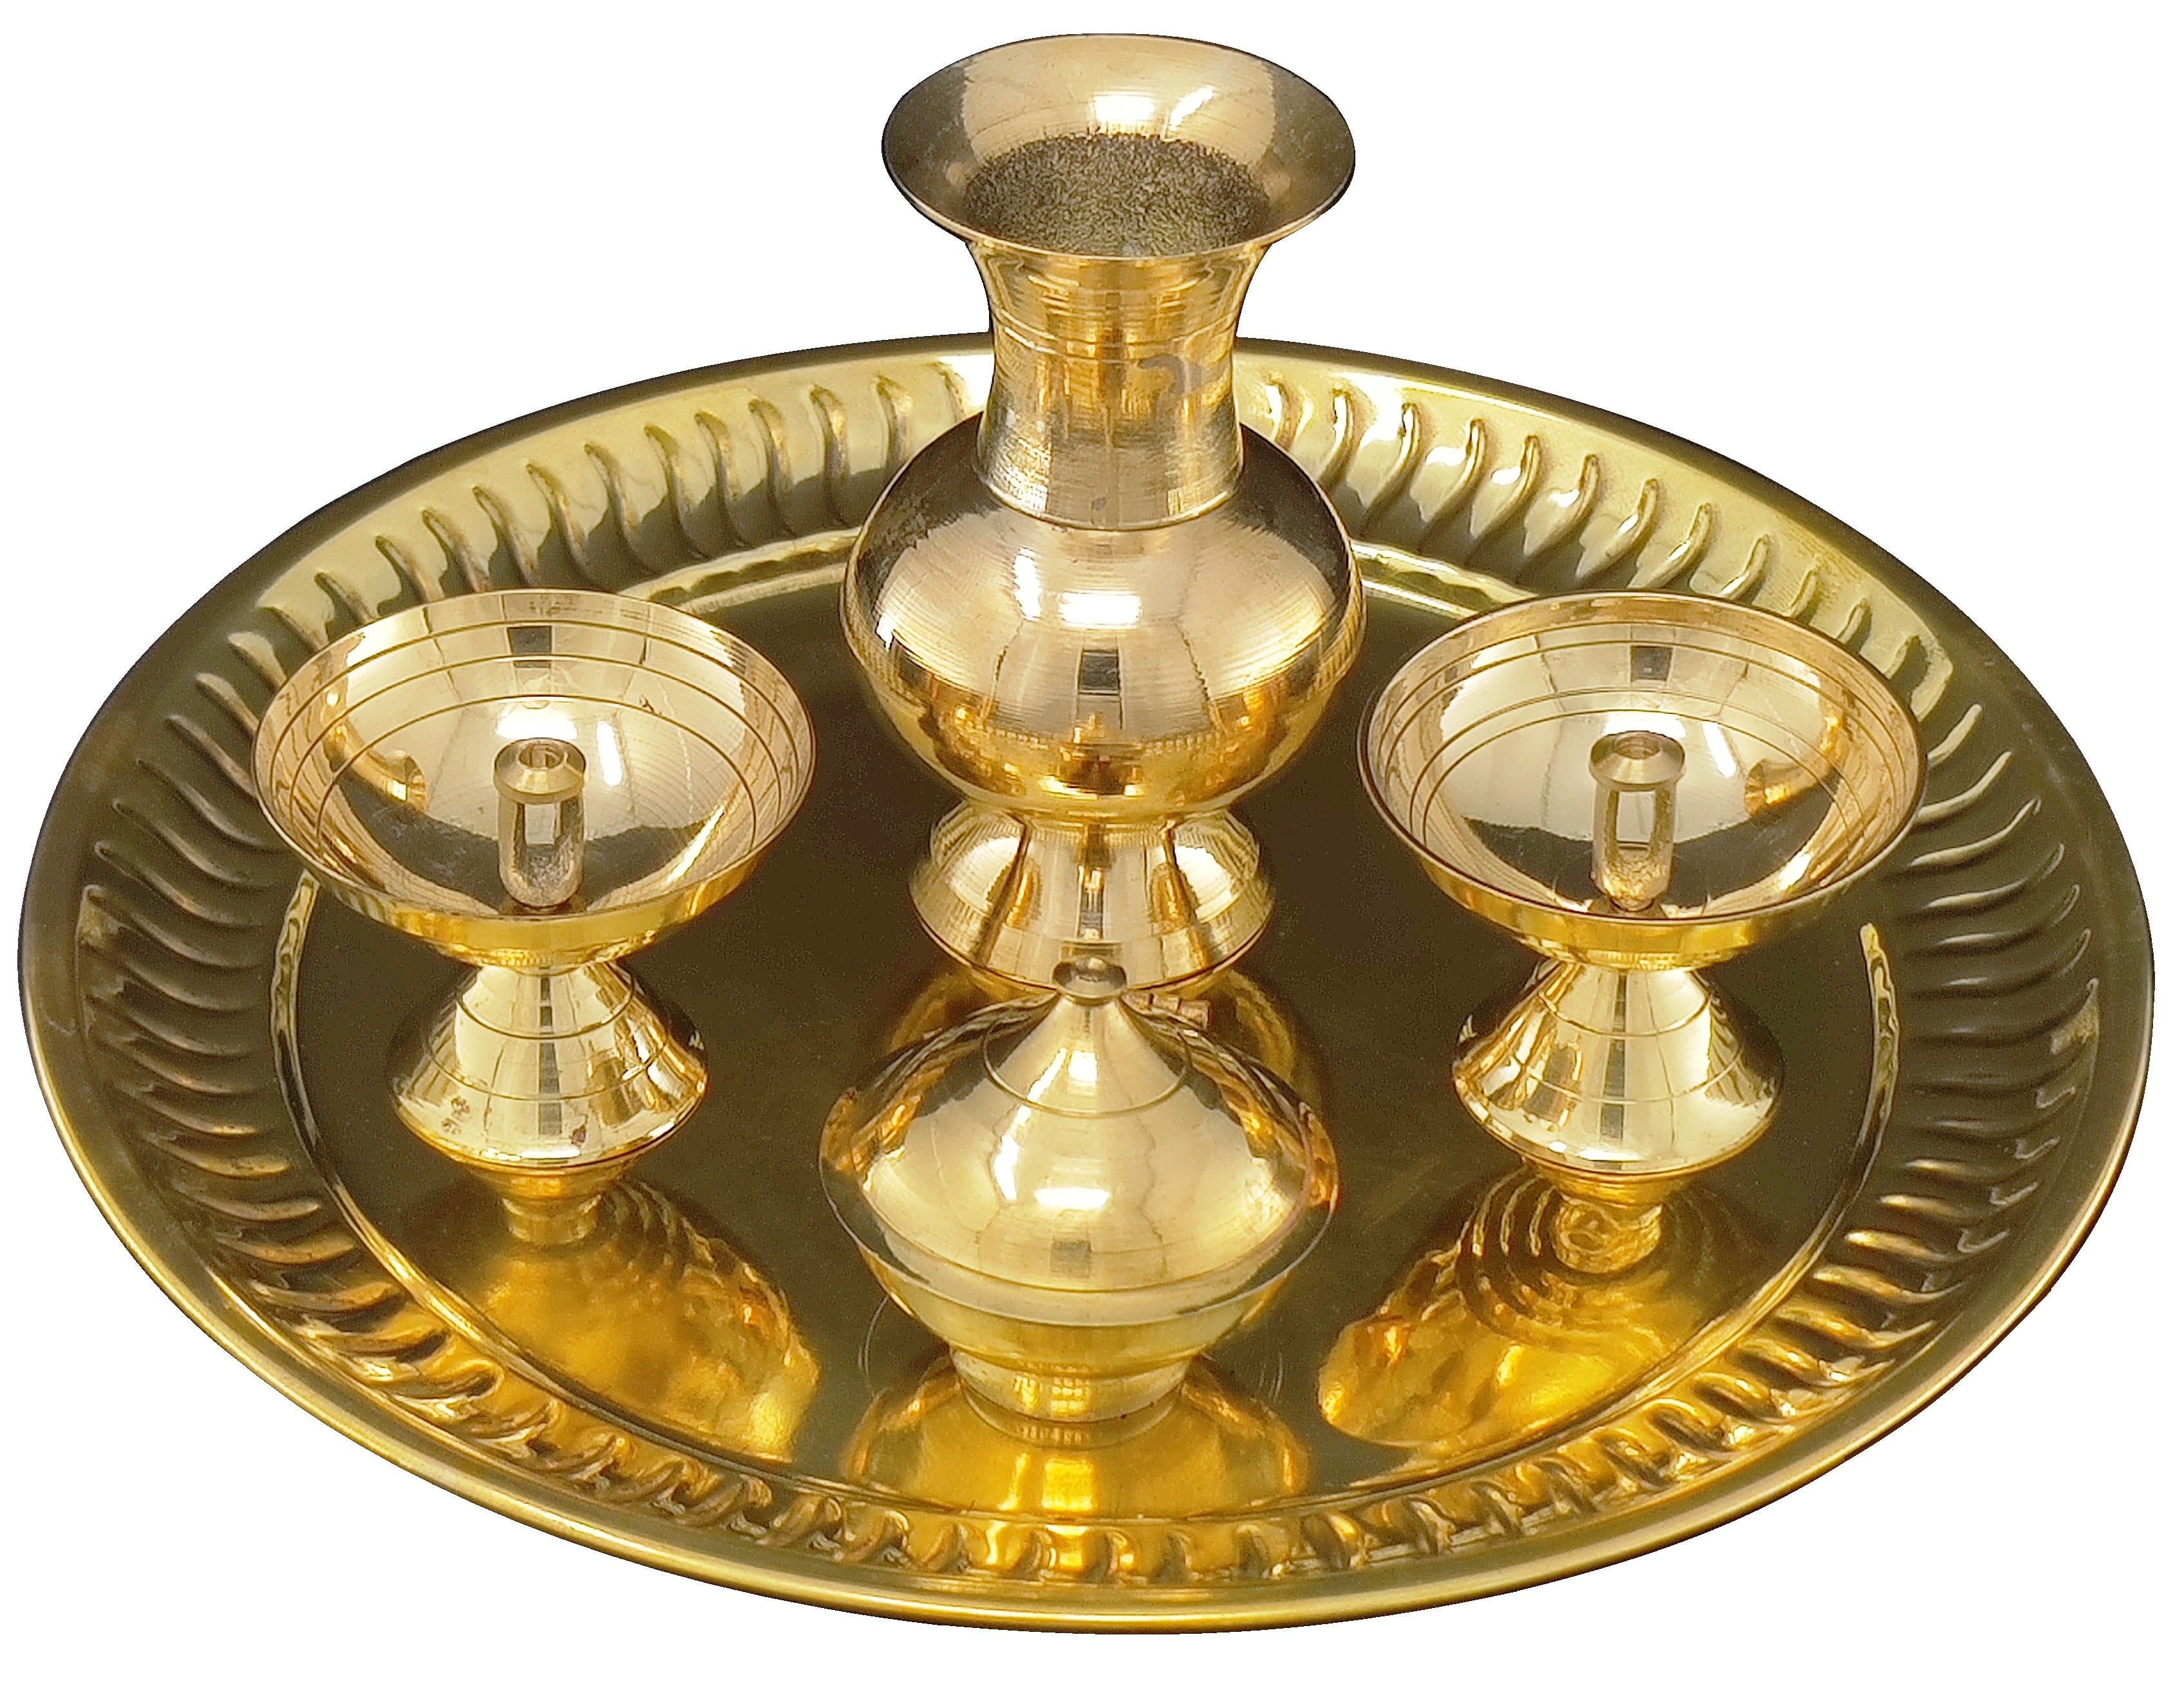 Bengalen Brass Pooja thali 8 Inch with Kalash Diya and other Accessori